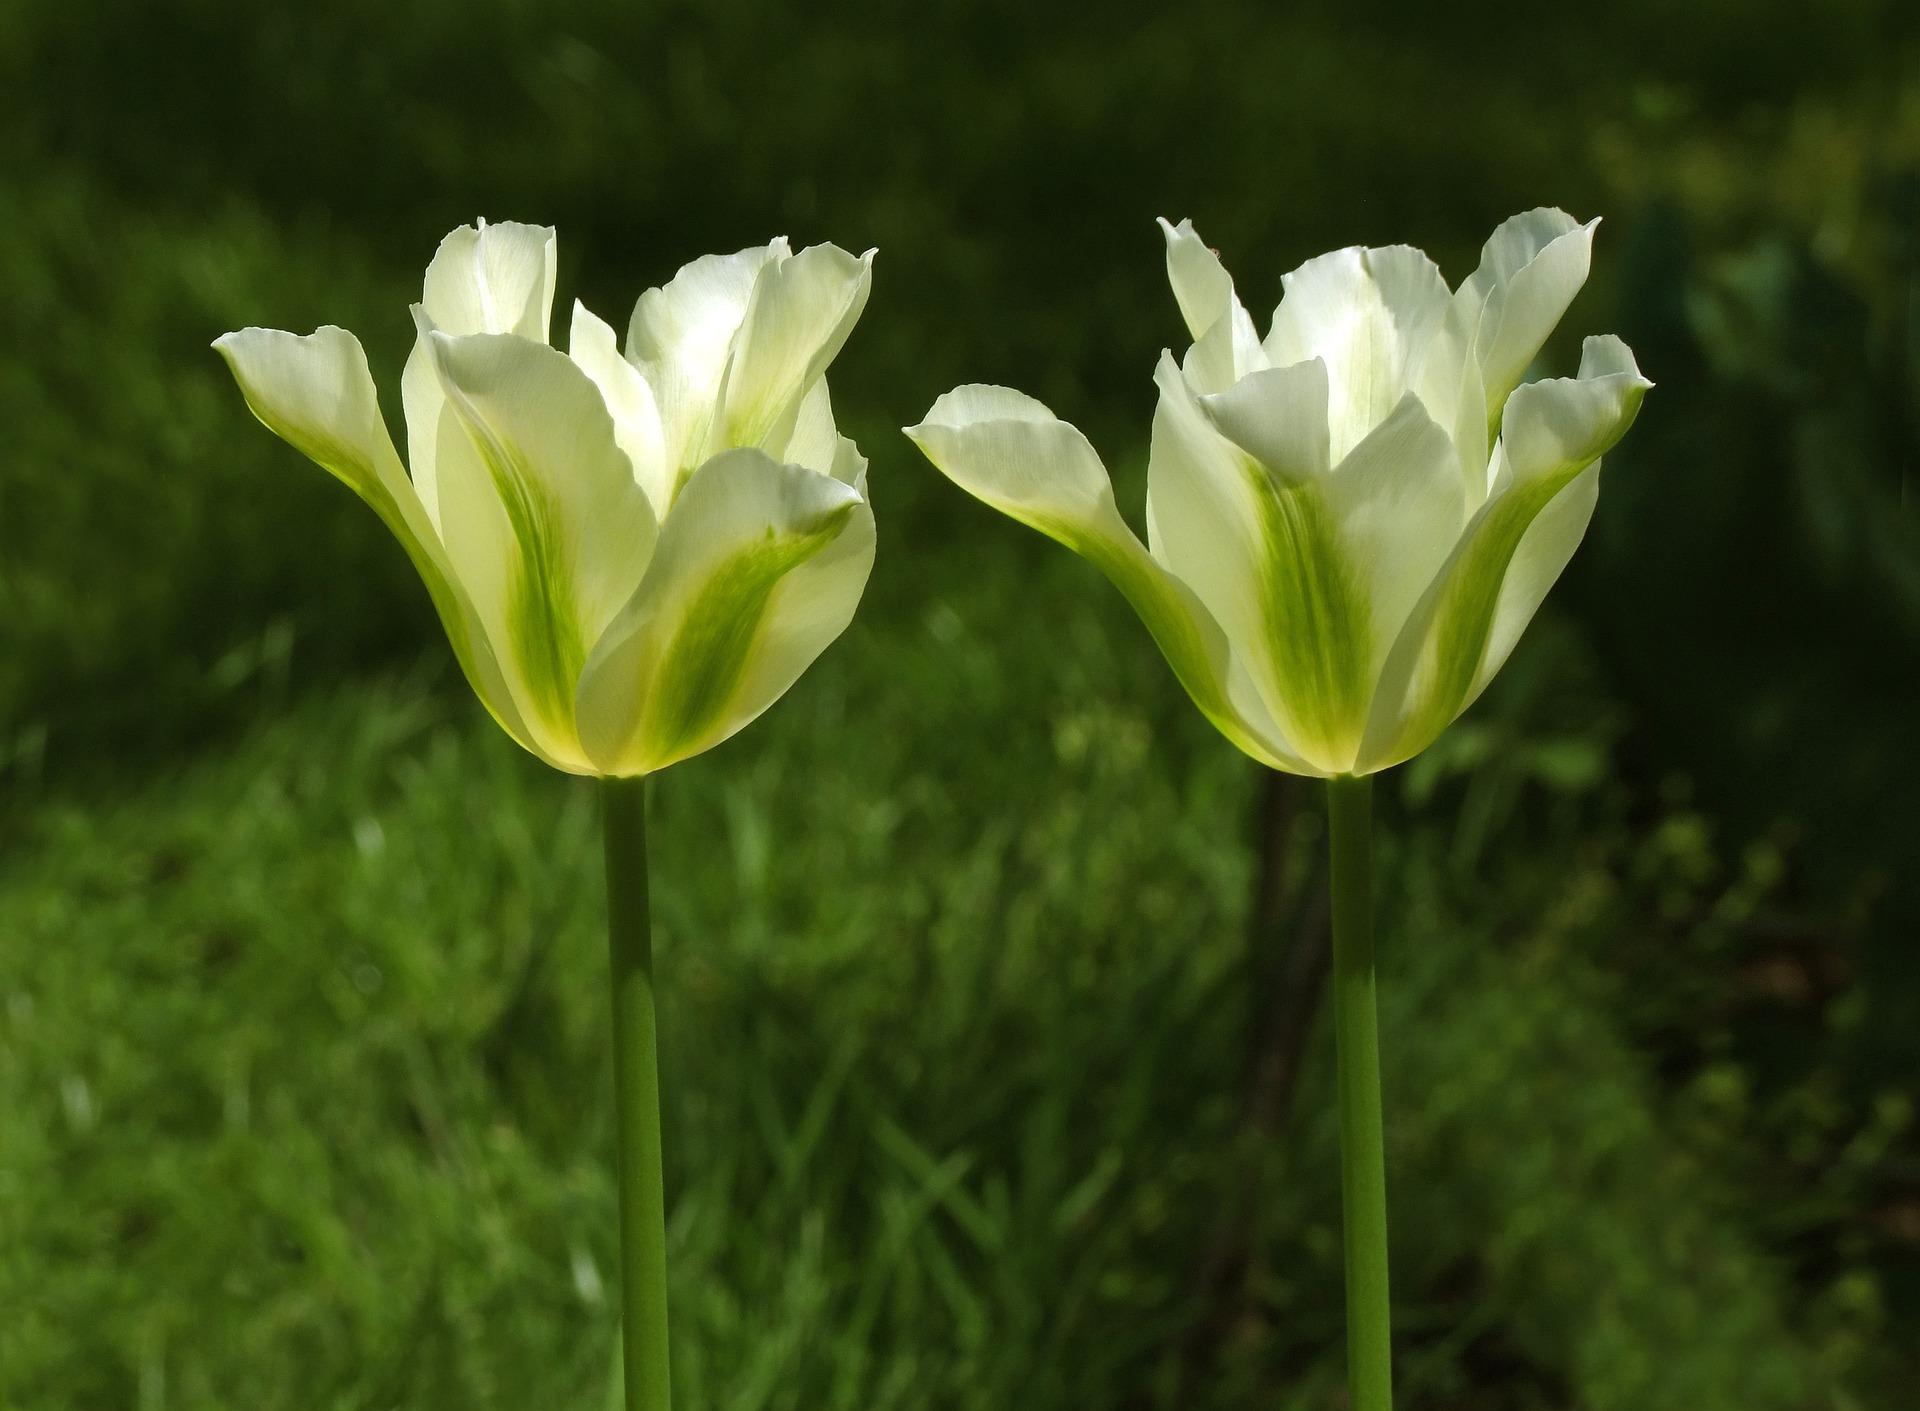 Tulip Viridiflora 'Spring Green' - Tulip from Leo Berbee Bulb Company